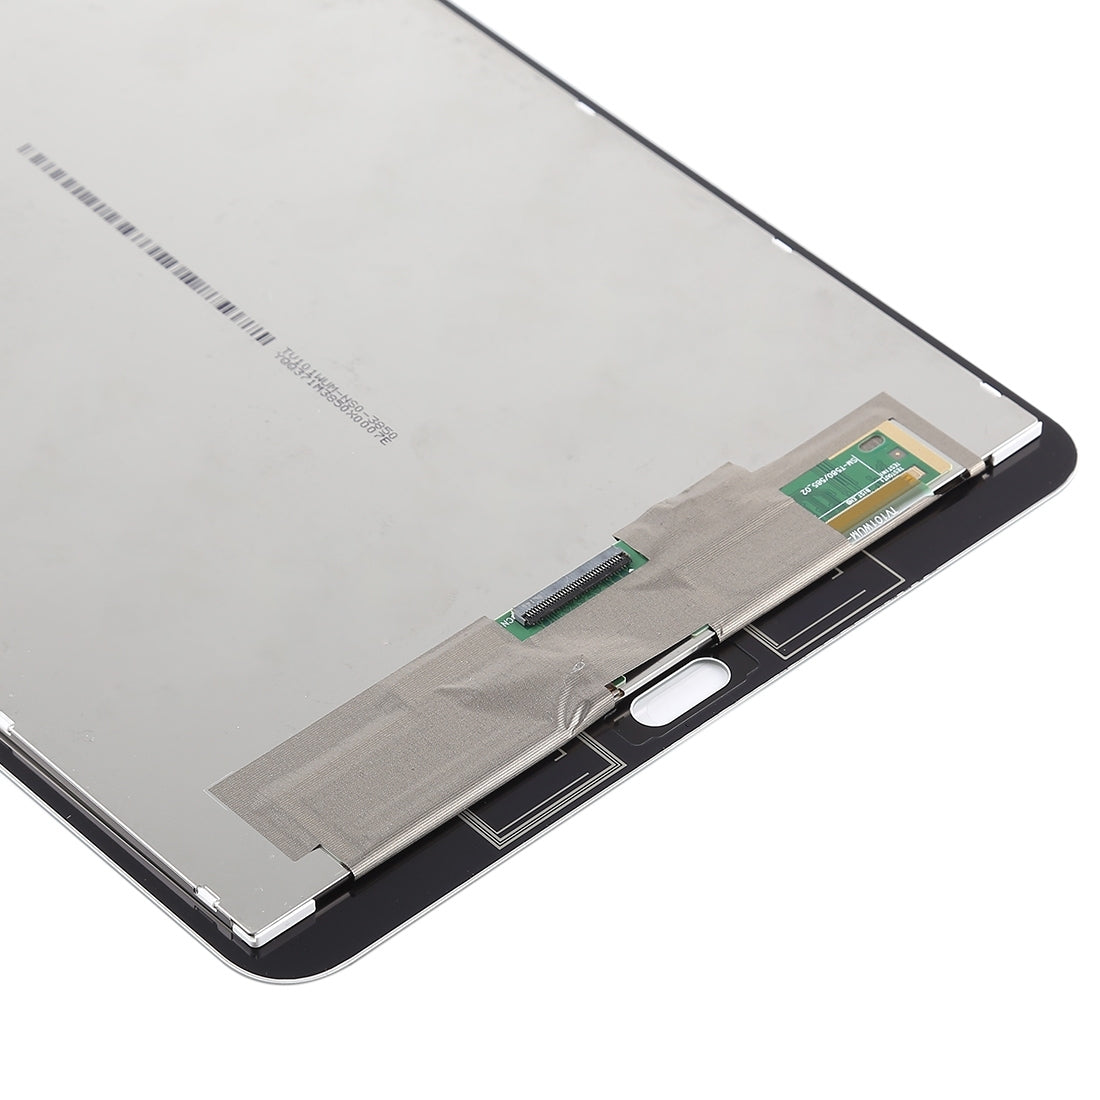 LCD Screen + Touch Digitizer Samsung Galaxy Tab A 10.1 / T585 White